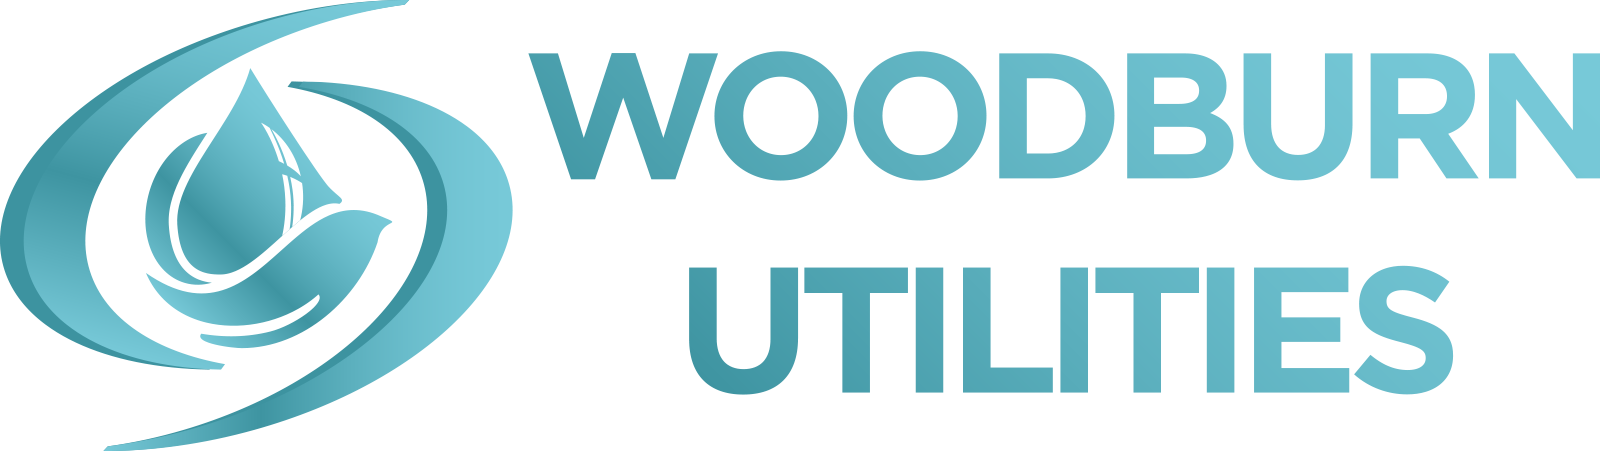 Woodburn Utilities LTD